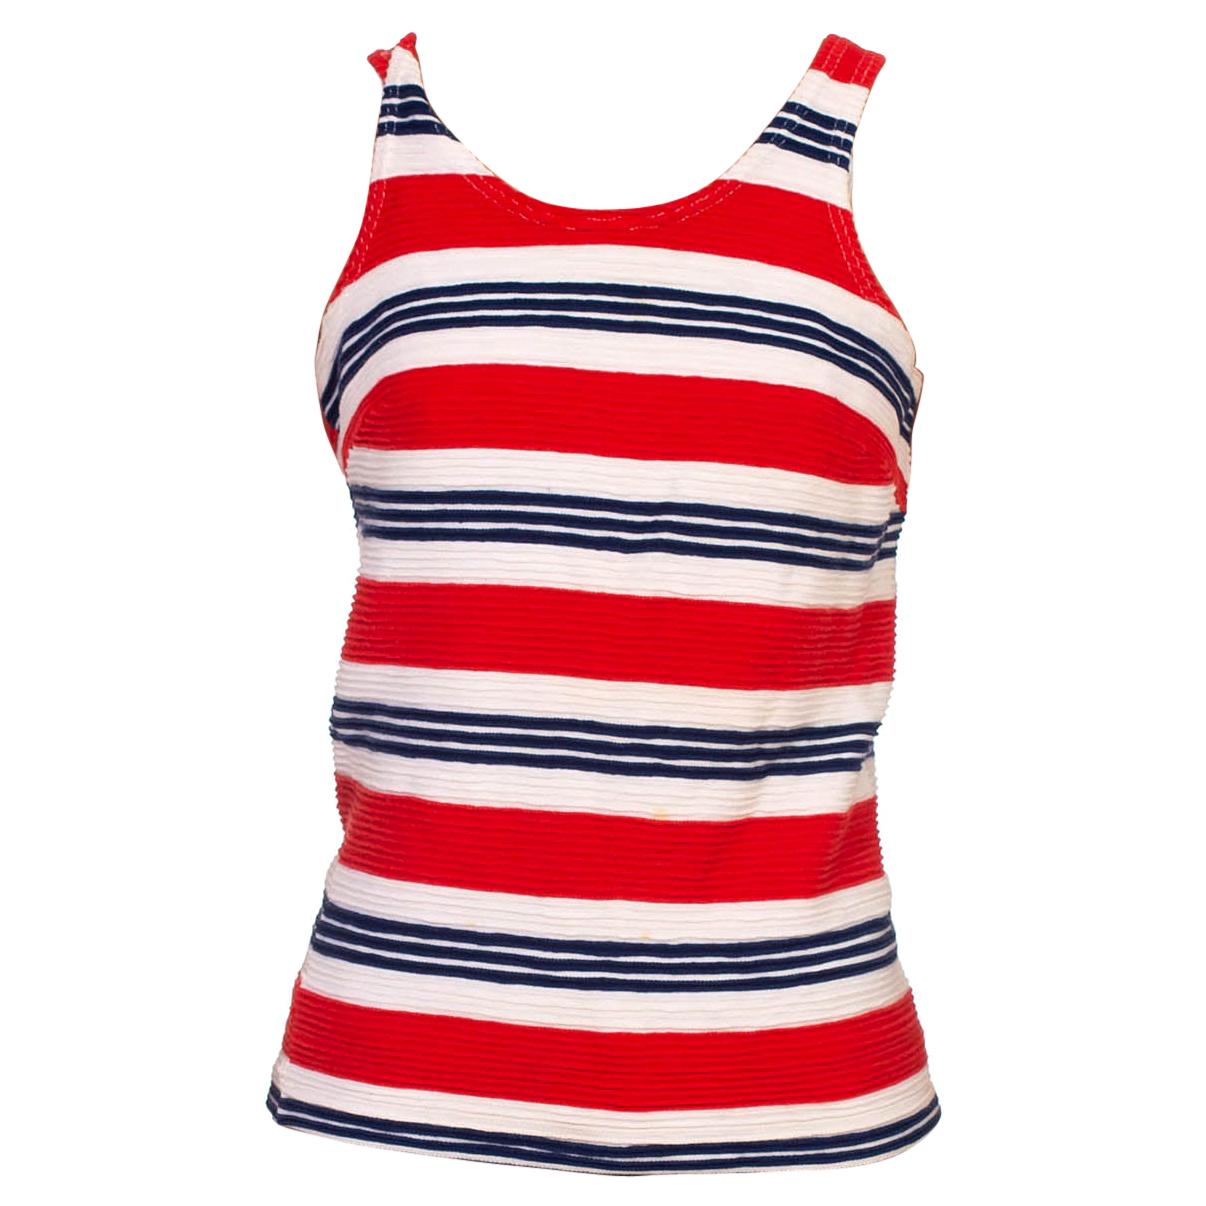 1960S JANZTEN Red, White & Blue Striped Cotton Top